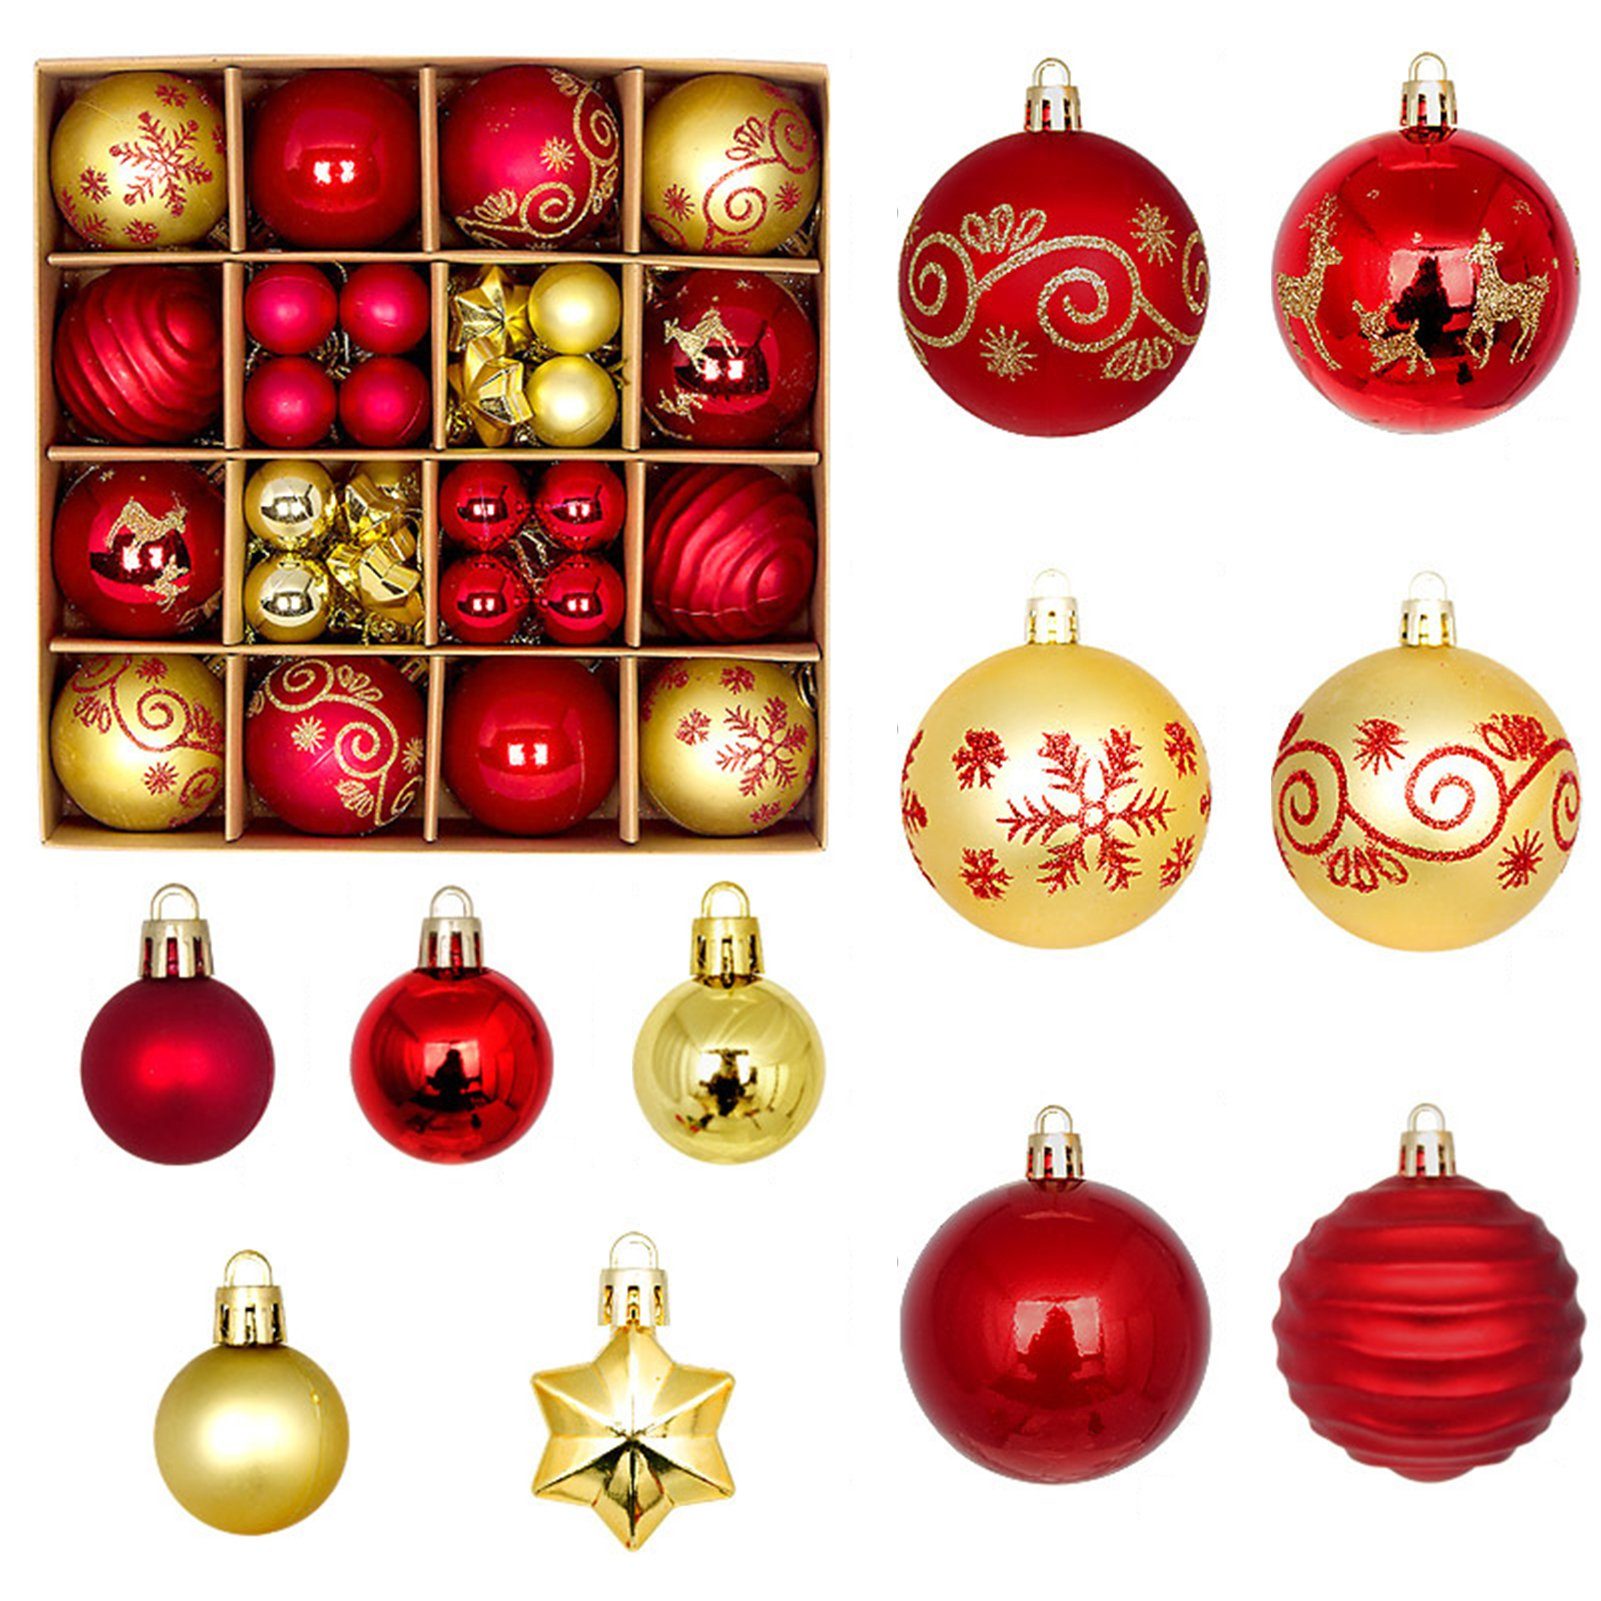 Rutaqian Weihnachtsbaumkugel Weihnachtskugeln, 44 Stück/Set Geschenkbox Weihnachtskugel Farbkugel 3-6cm Rot-Weiß-Weihnachtsball-Ornament, D Plastik aus Set